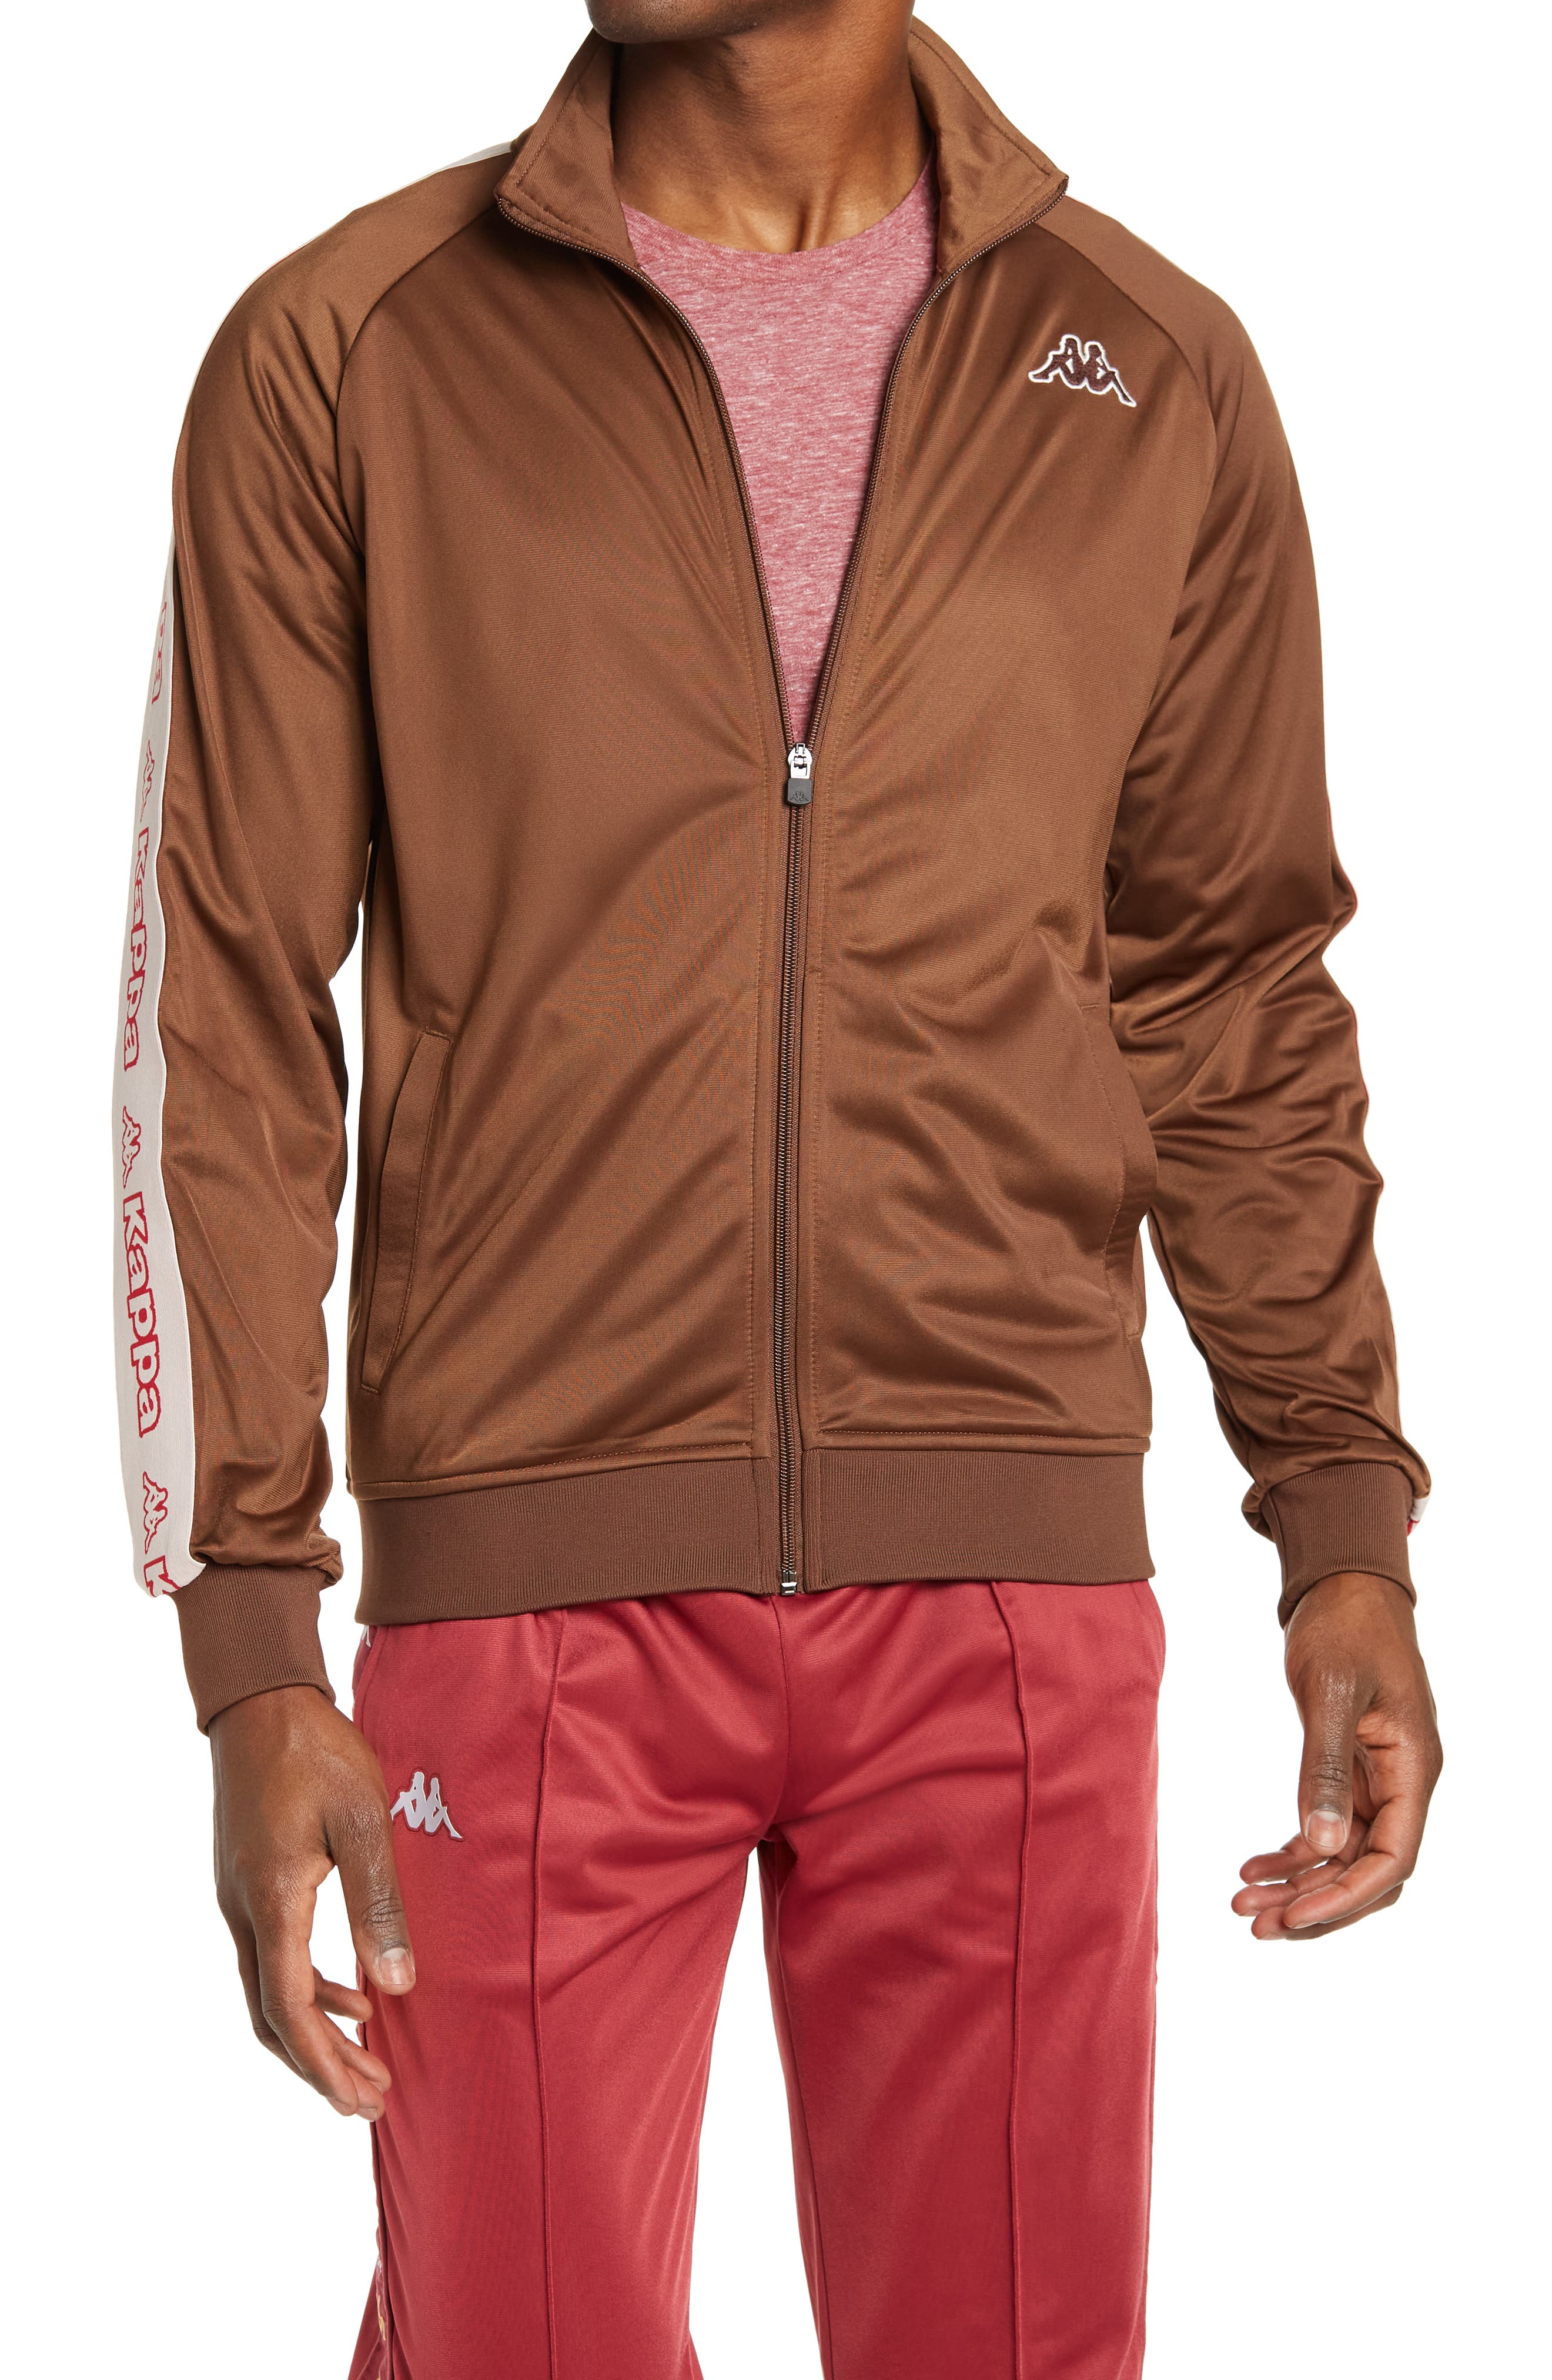 Kappa Men's Artem-2 Logo Tape Track Jacket in Brown-Pink-Red Cherry at Nordstrom, Size Medium